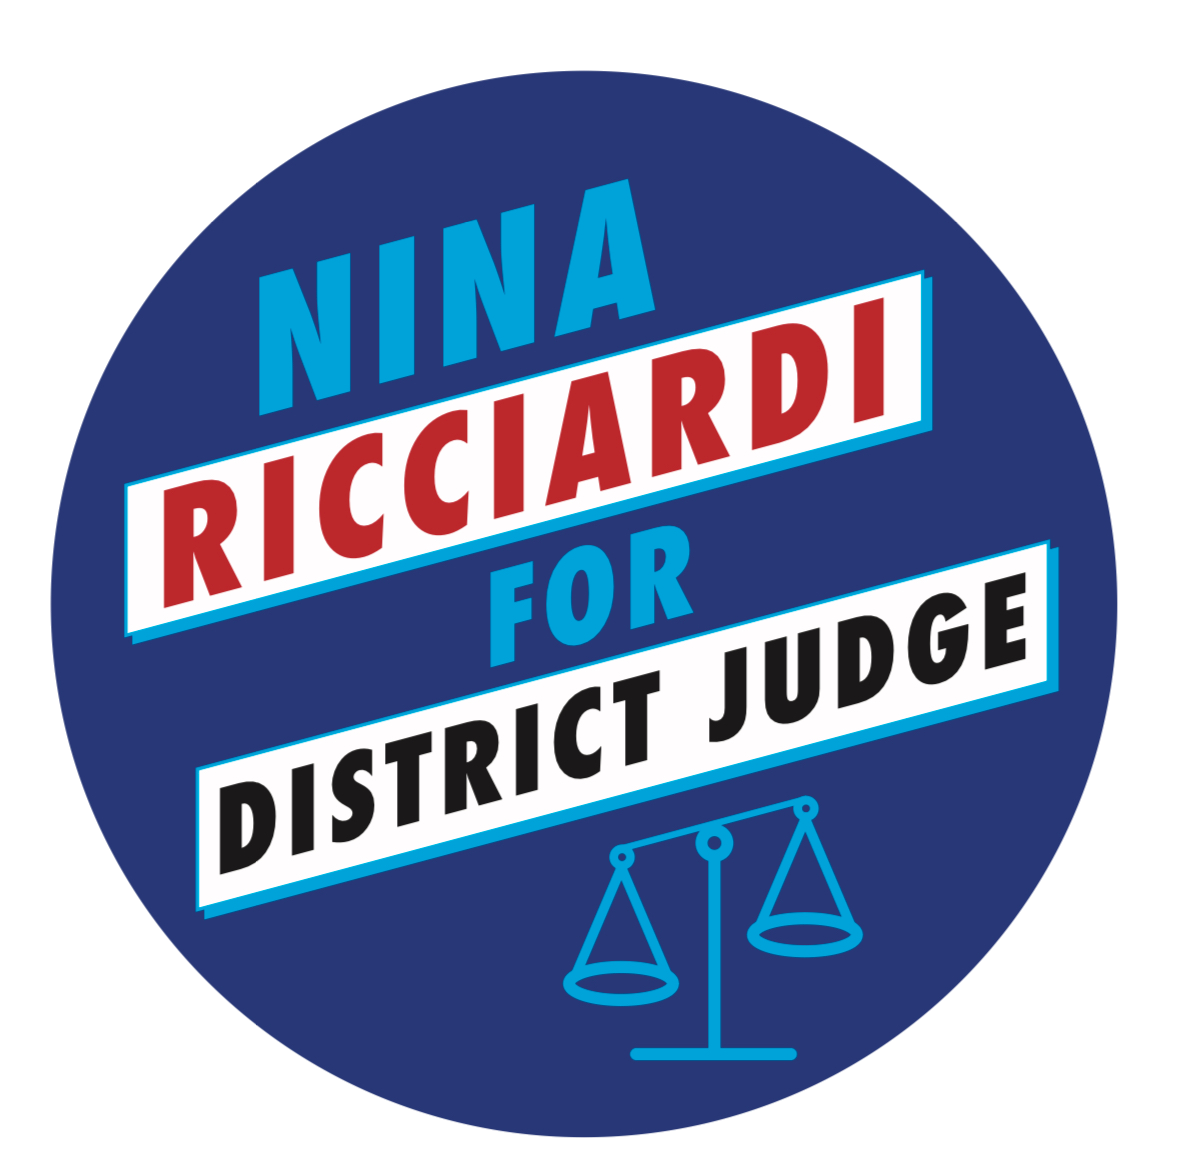 Nina Ricciardi for District Judge